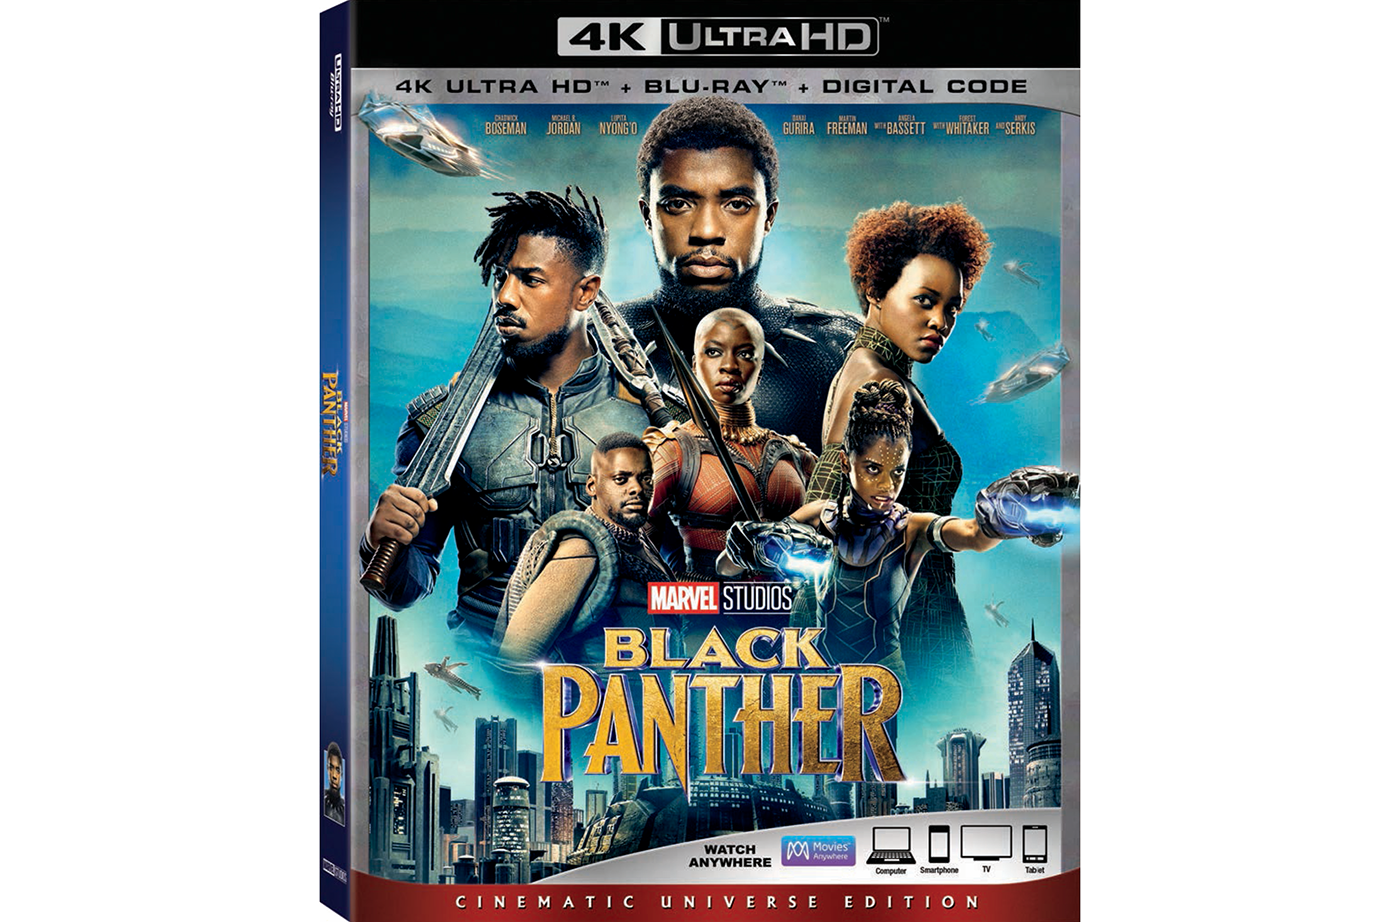 Black Panther on Blu-ray